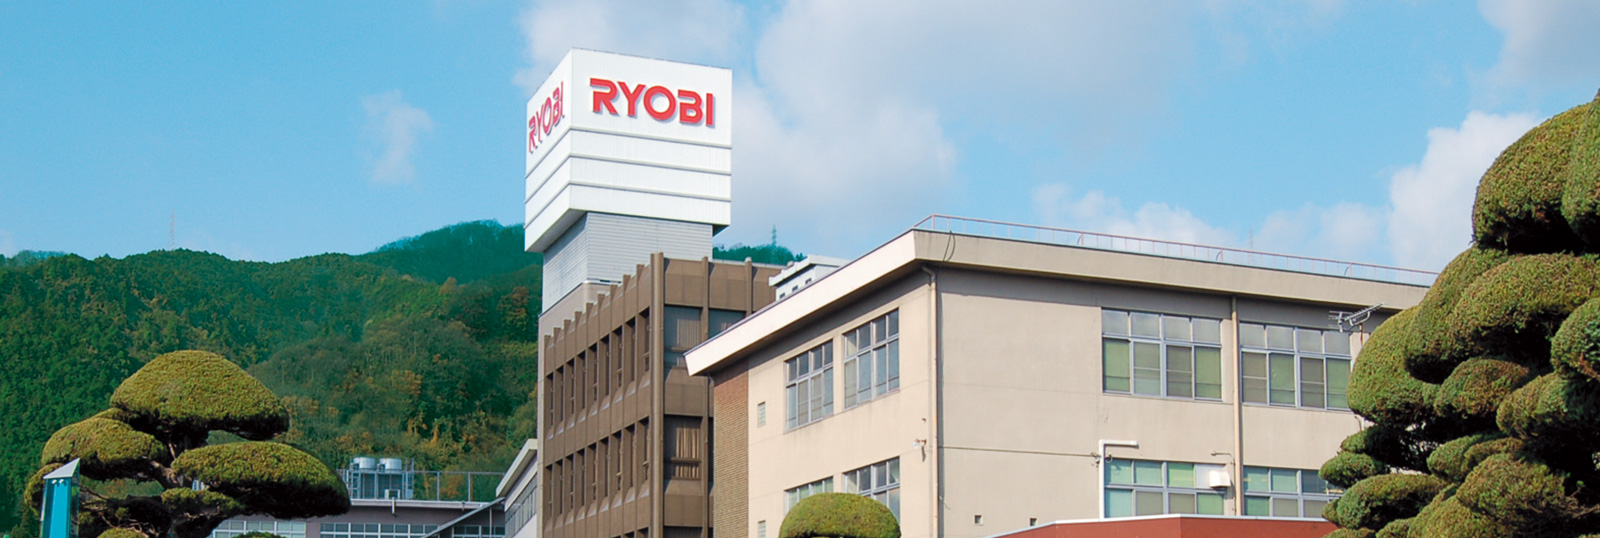 Corporate | About Us | Ryobi